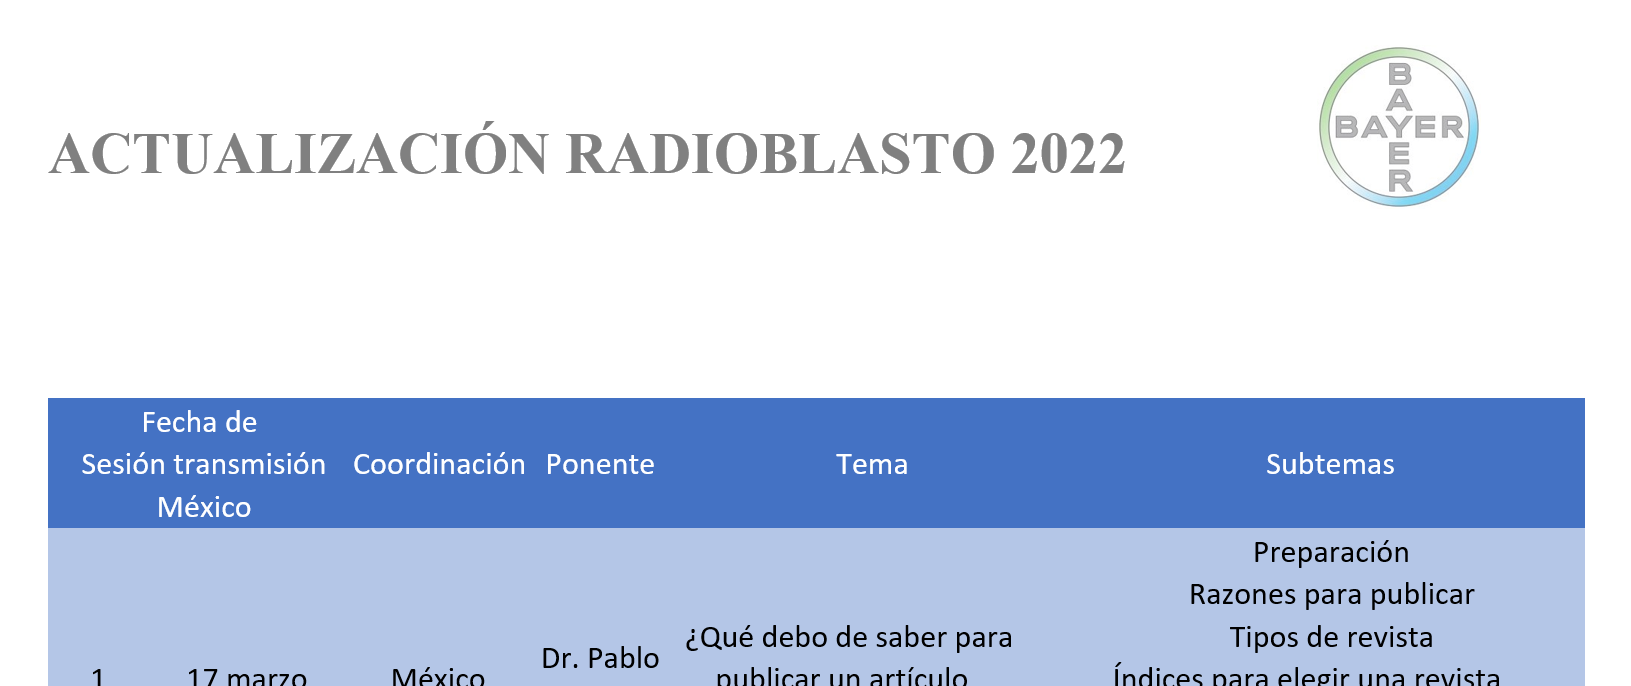 1299 ACTUALIZACIÓN RADIOBLASTO 2022